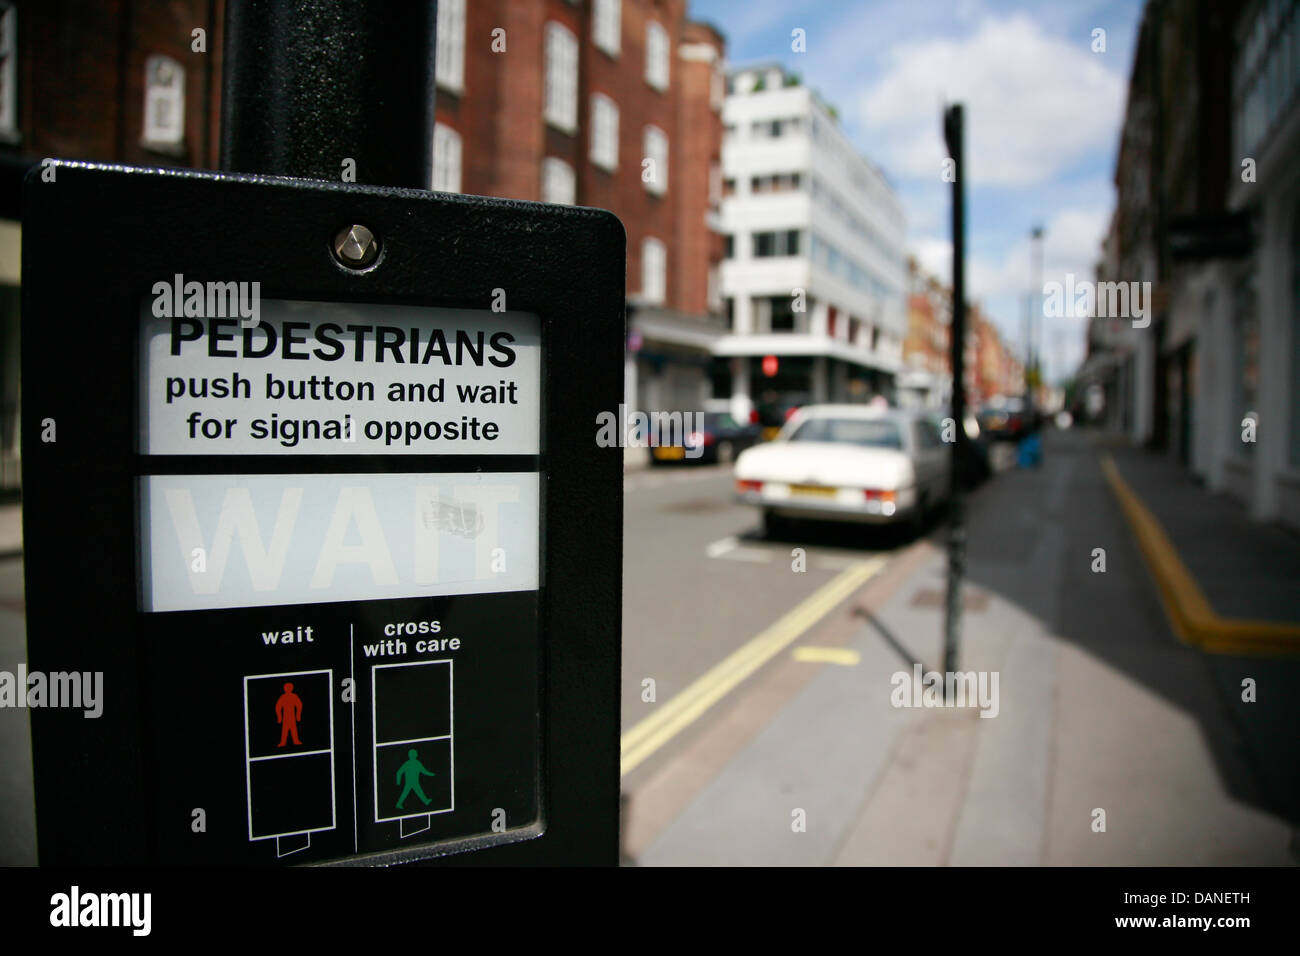 Pedestrians wait sign, London, UK Stock Photo